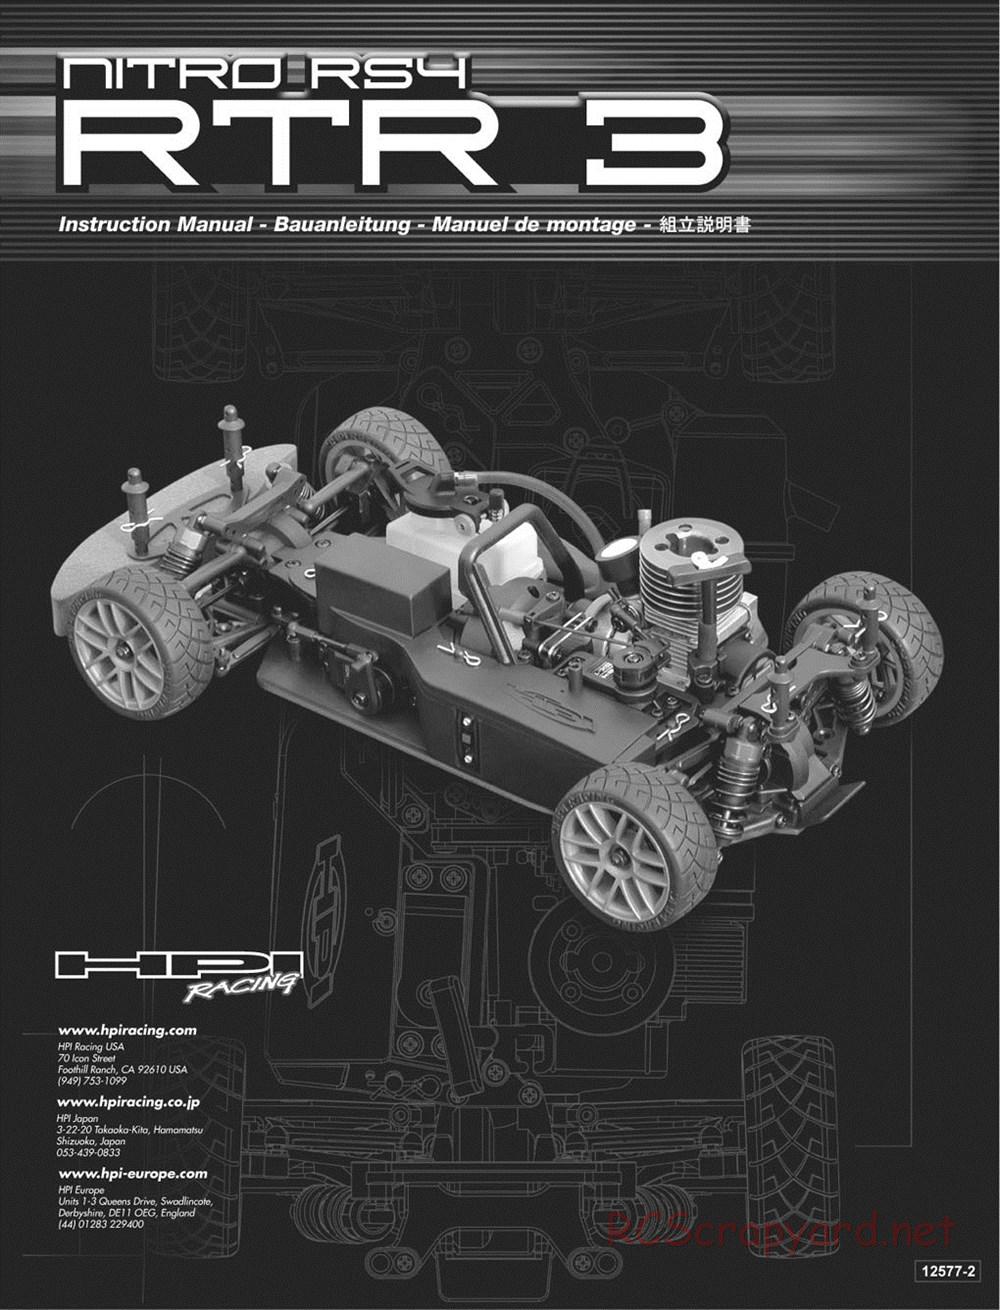 HPI - Nitro RS4 3 - Manual - Page 1